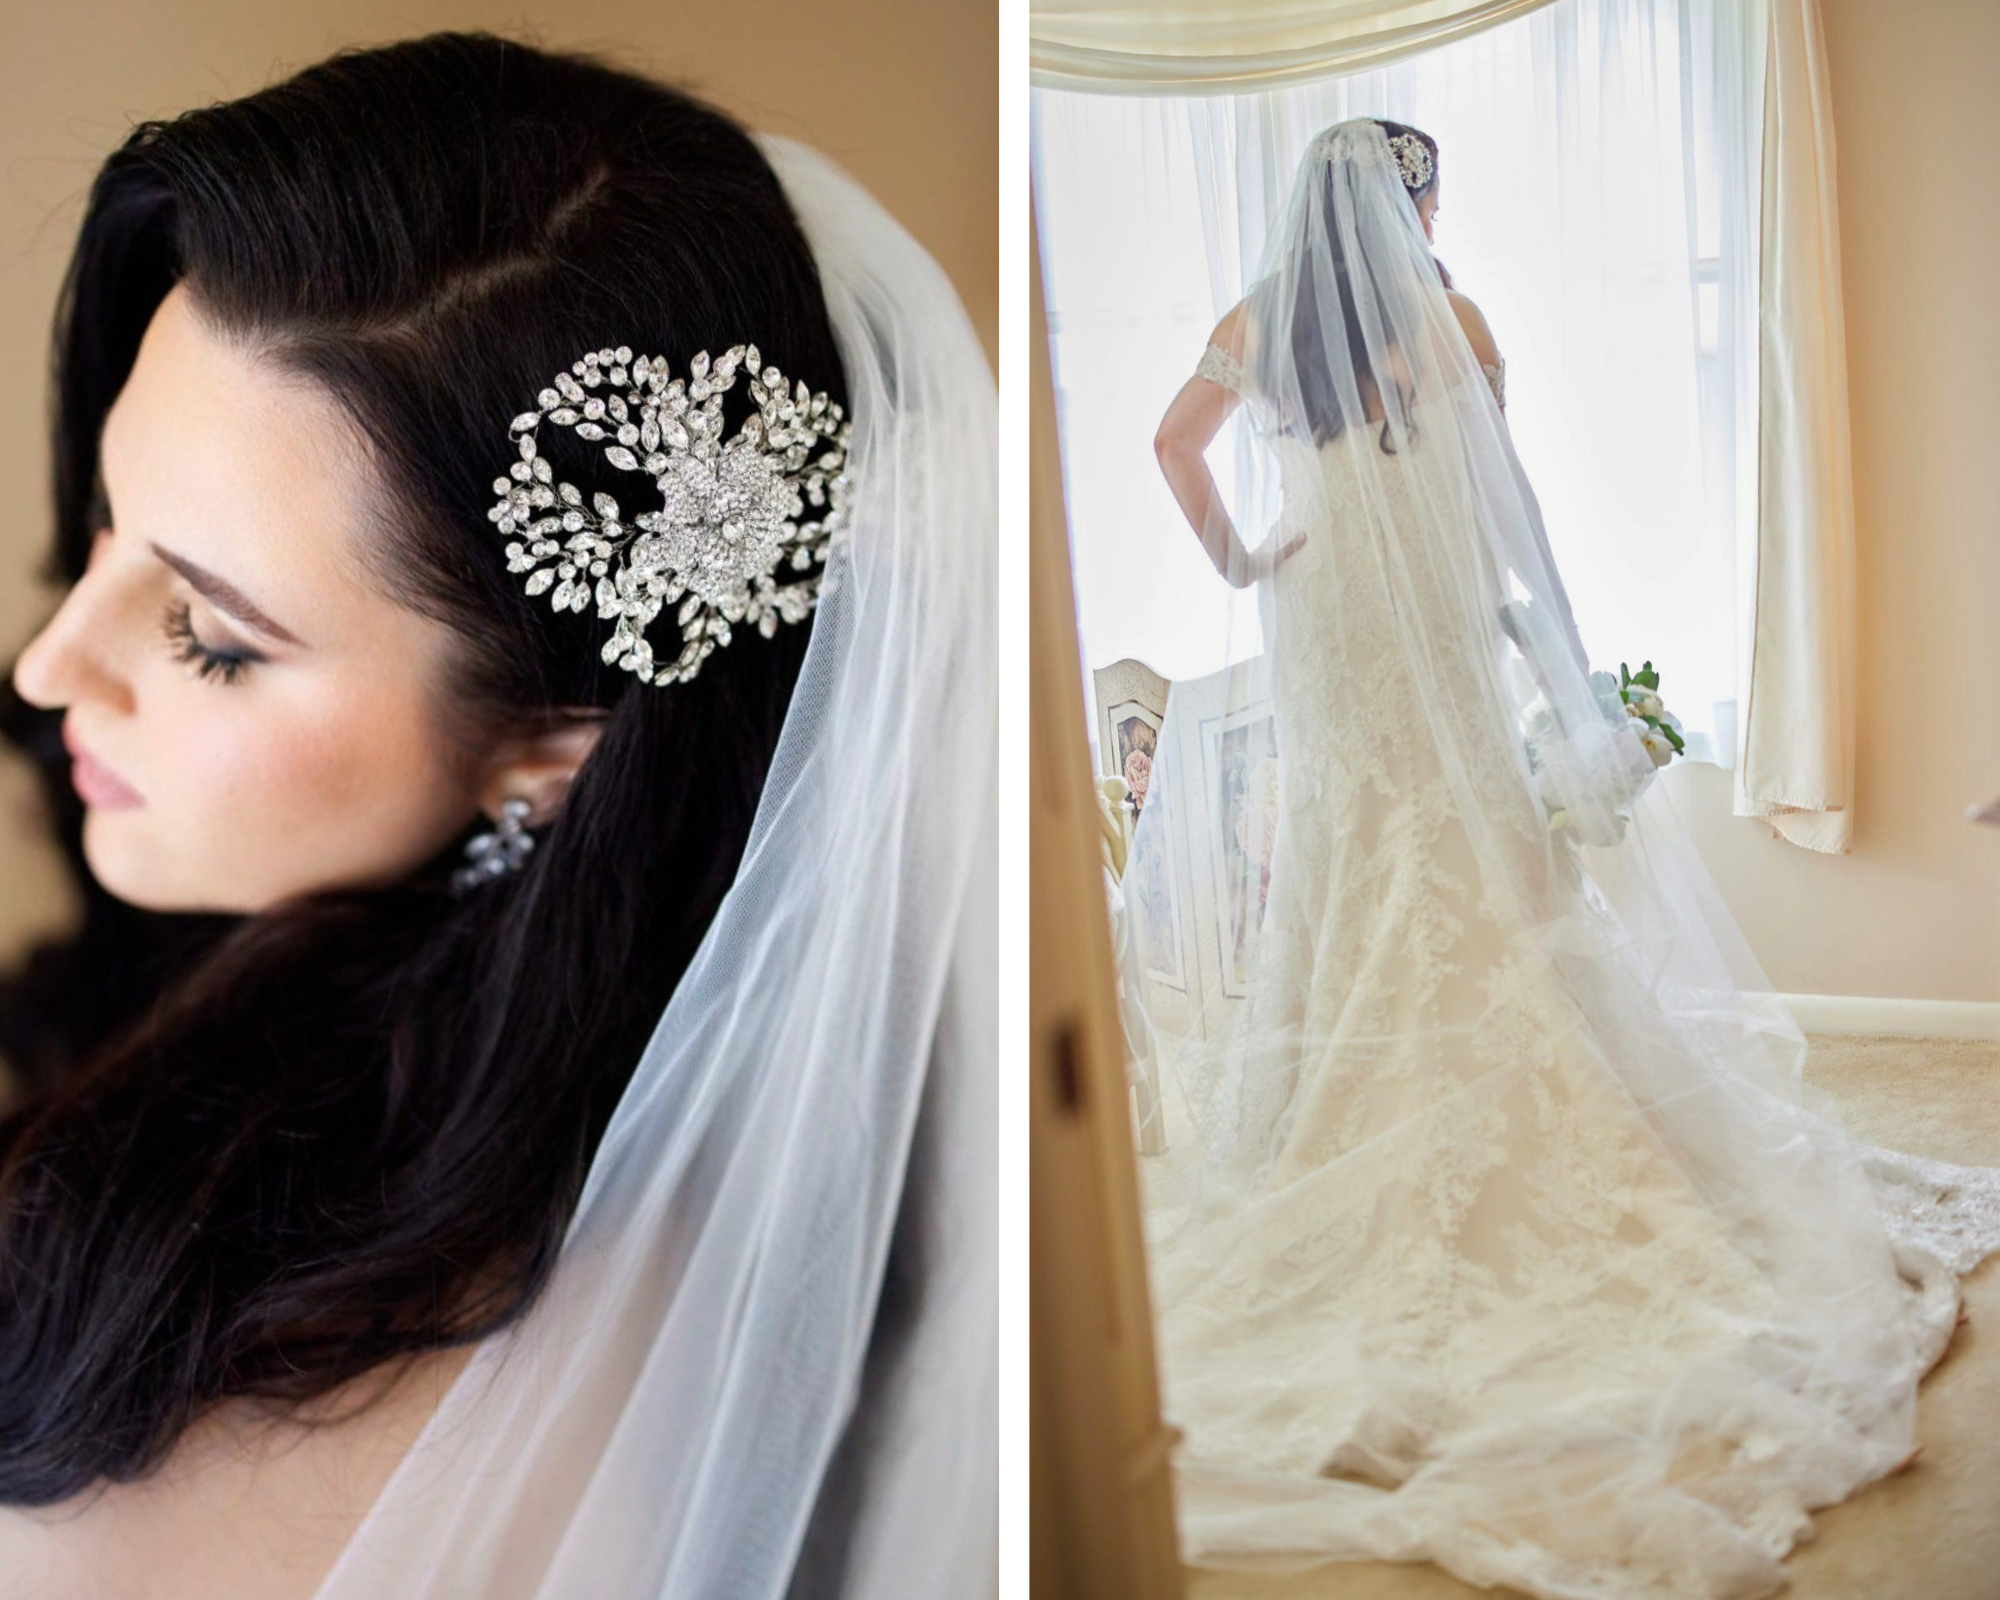 Our elegant Bridal Styles bride wearing her bold Swarovski crystal hairvine, veil, and wedding gown.